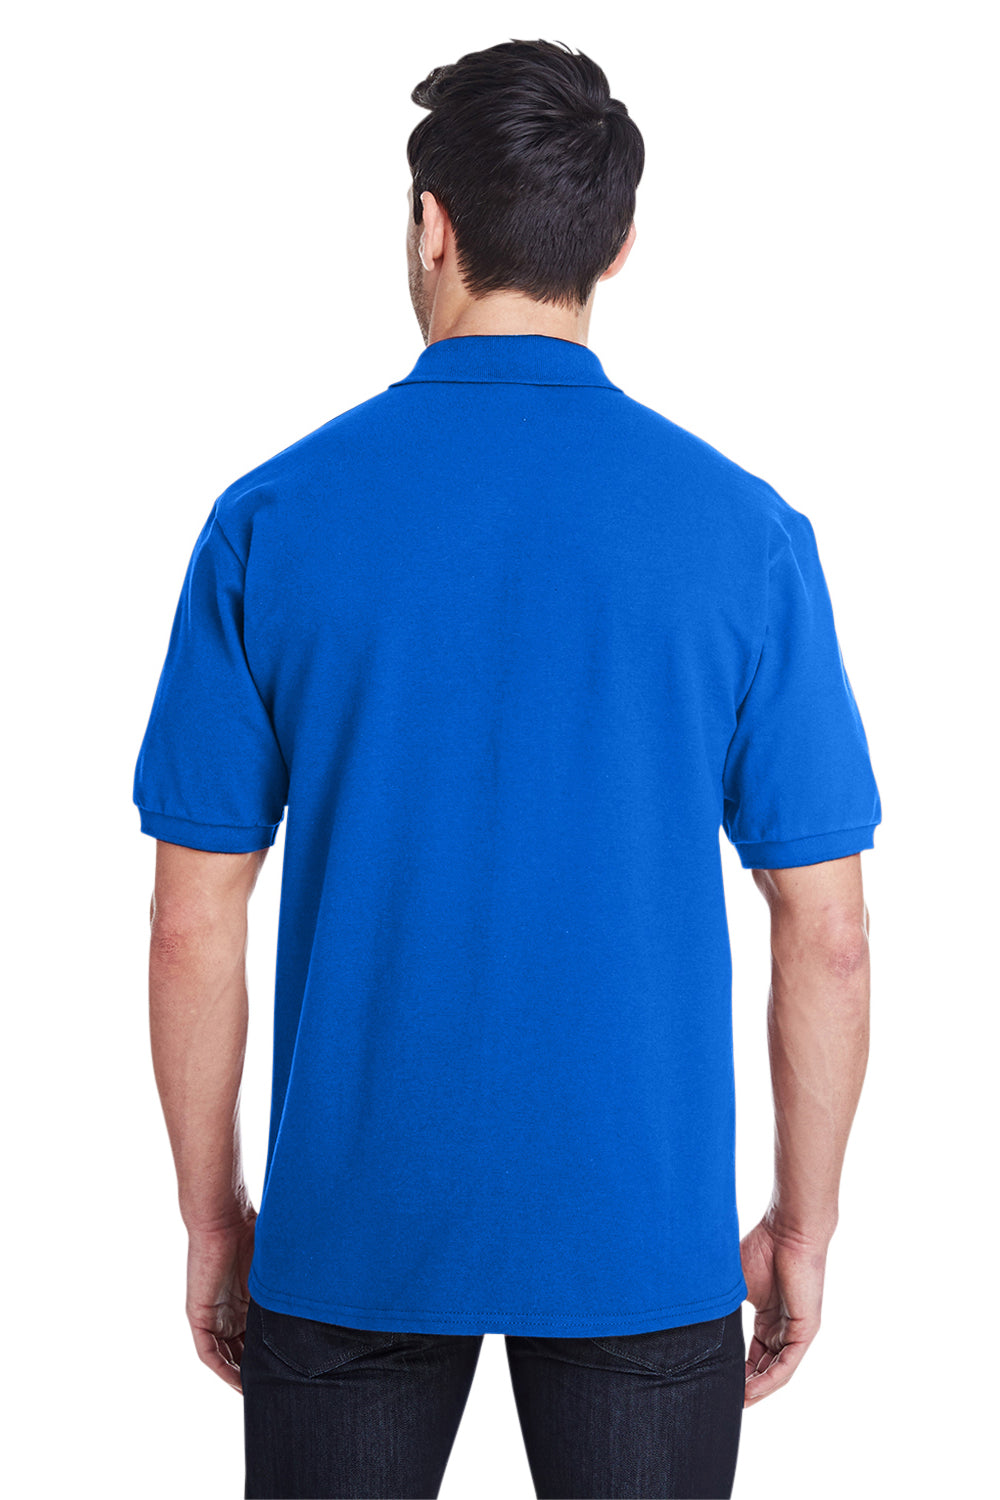 Jerzees 443MR Mens Short Sleeve Polo Shirt Royal Blue Back